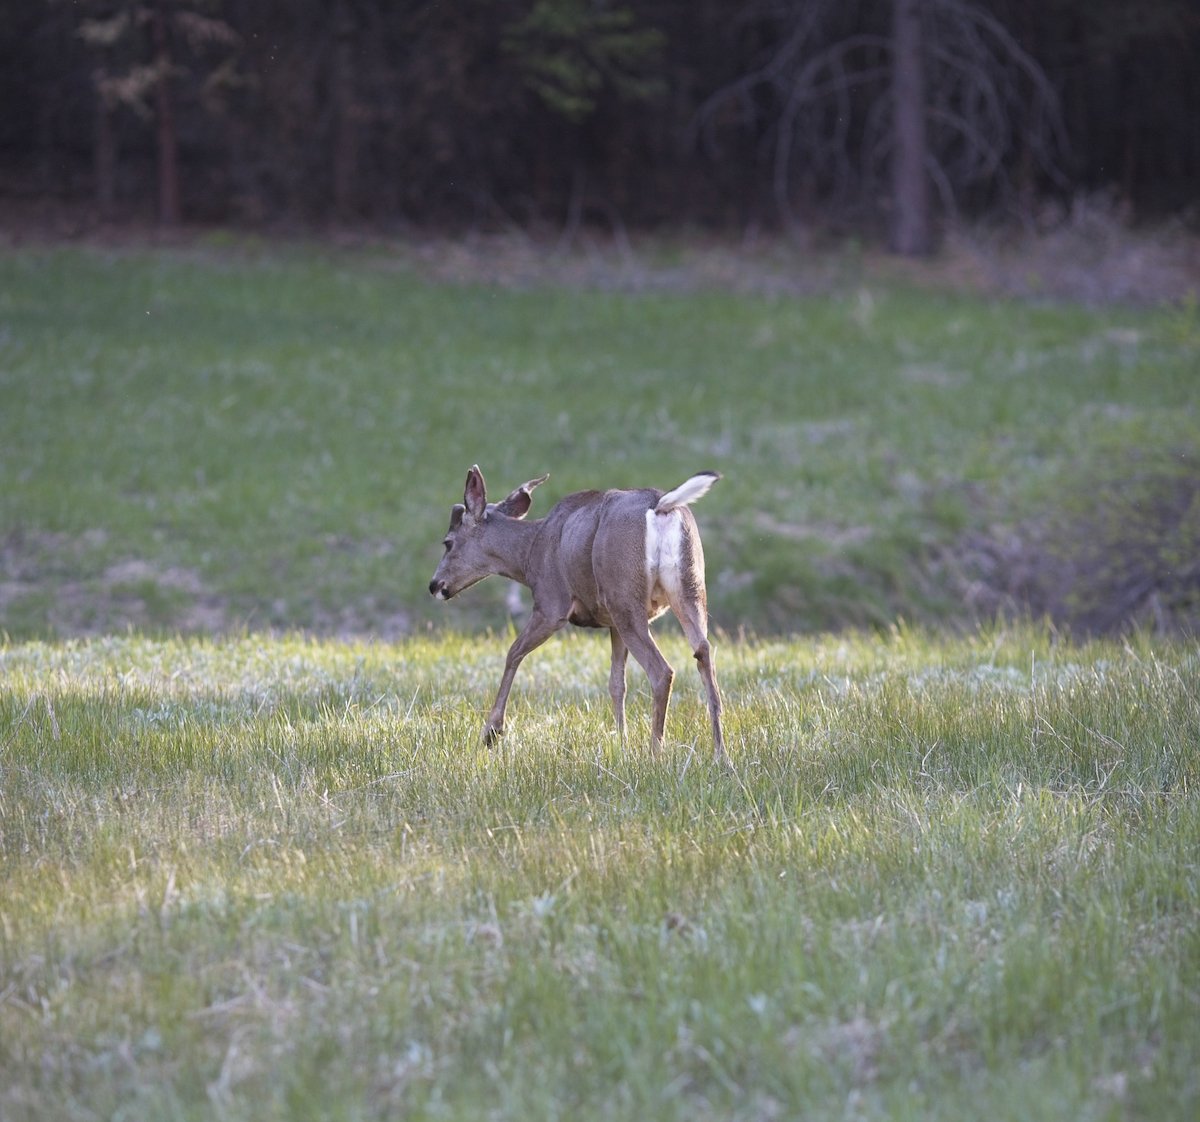 image of a deer grazing in a field